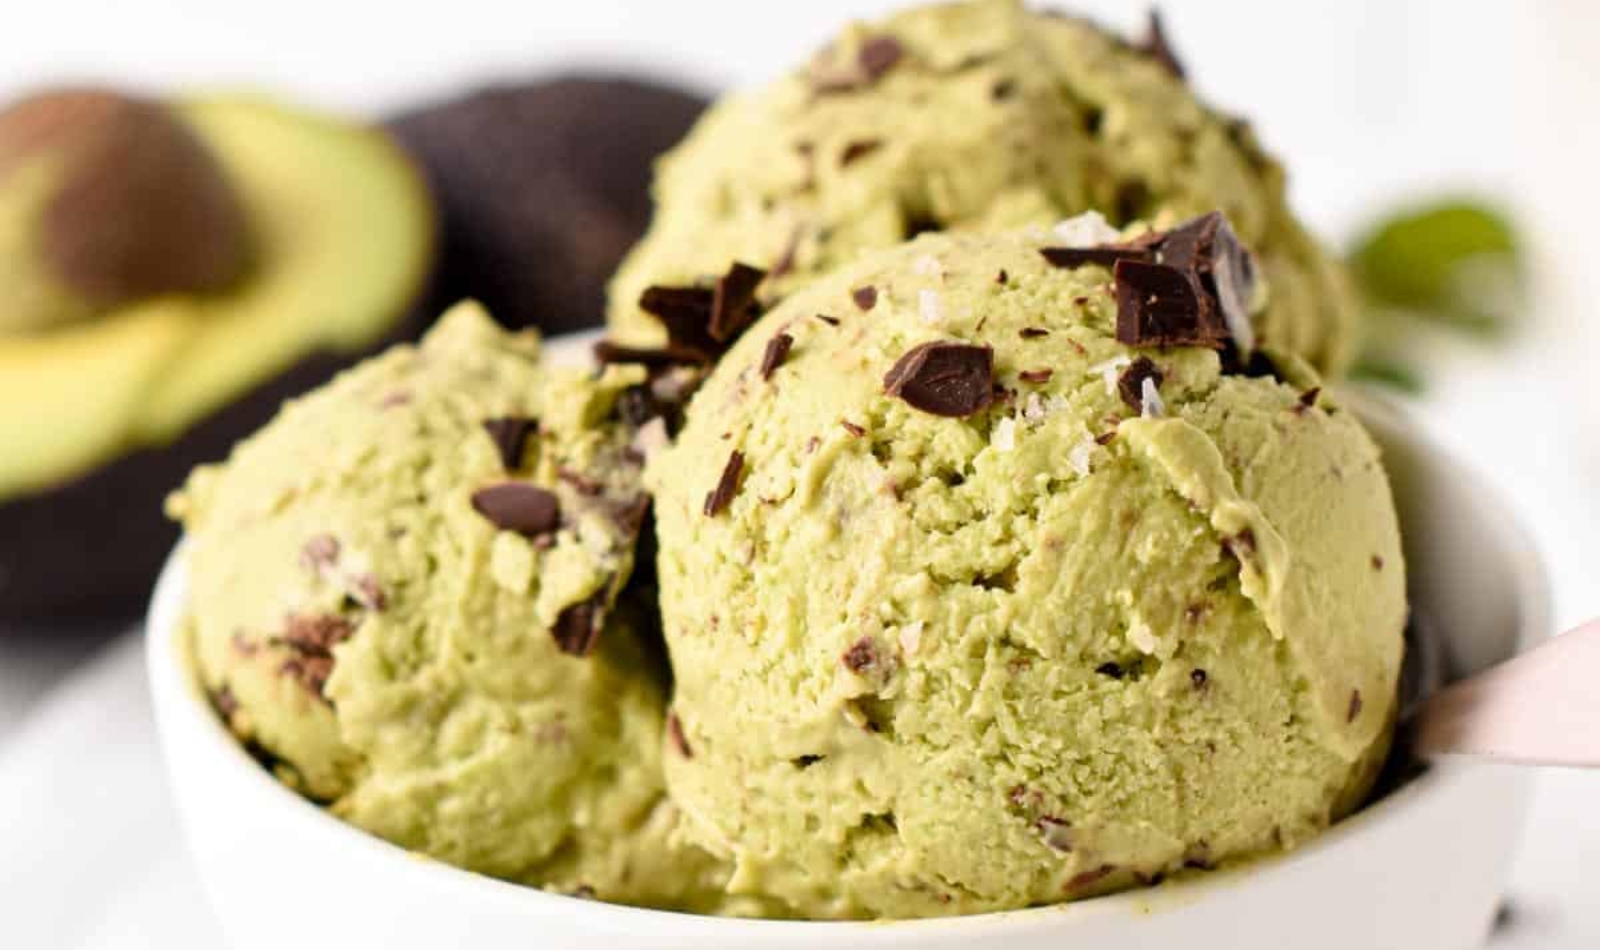 a bowl of avocado ice cream